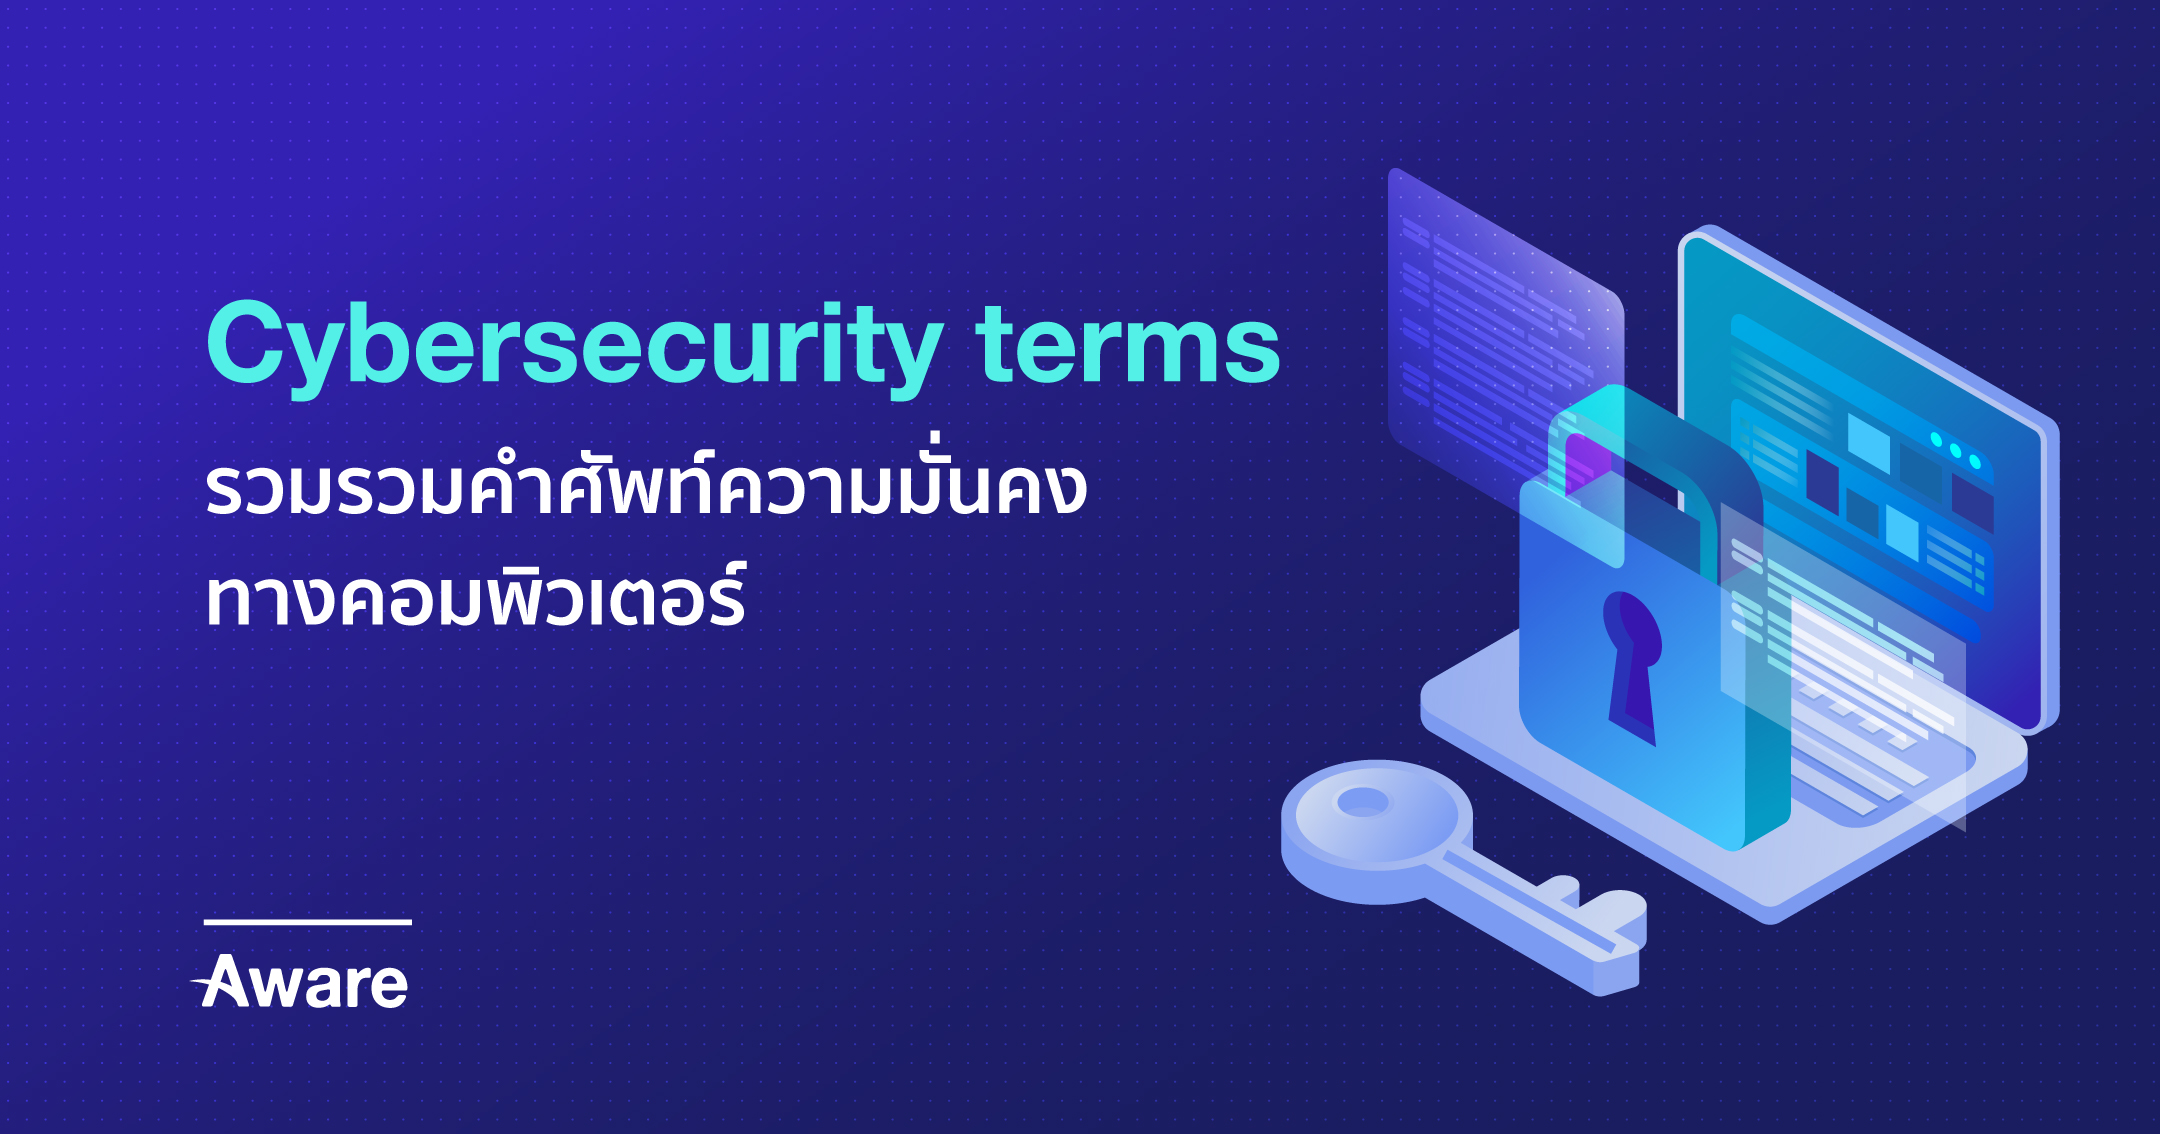 Cybersecurity terms - รวบรวมคำศัพท์โลกไซเบอร์